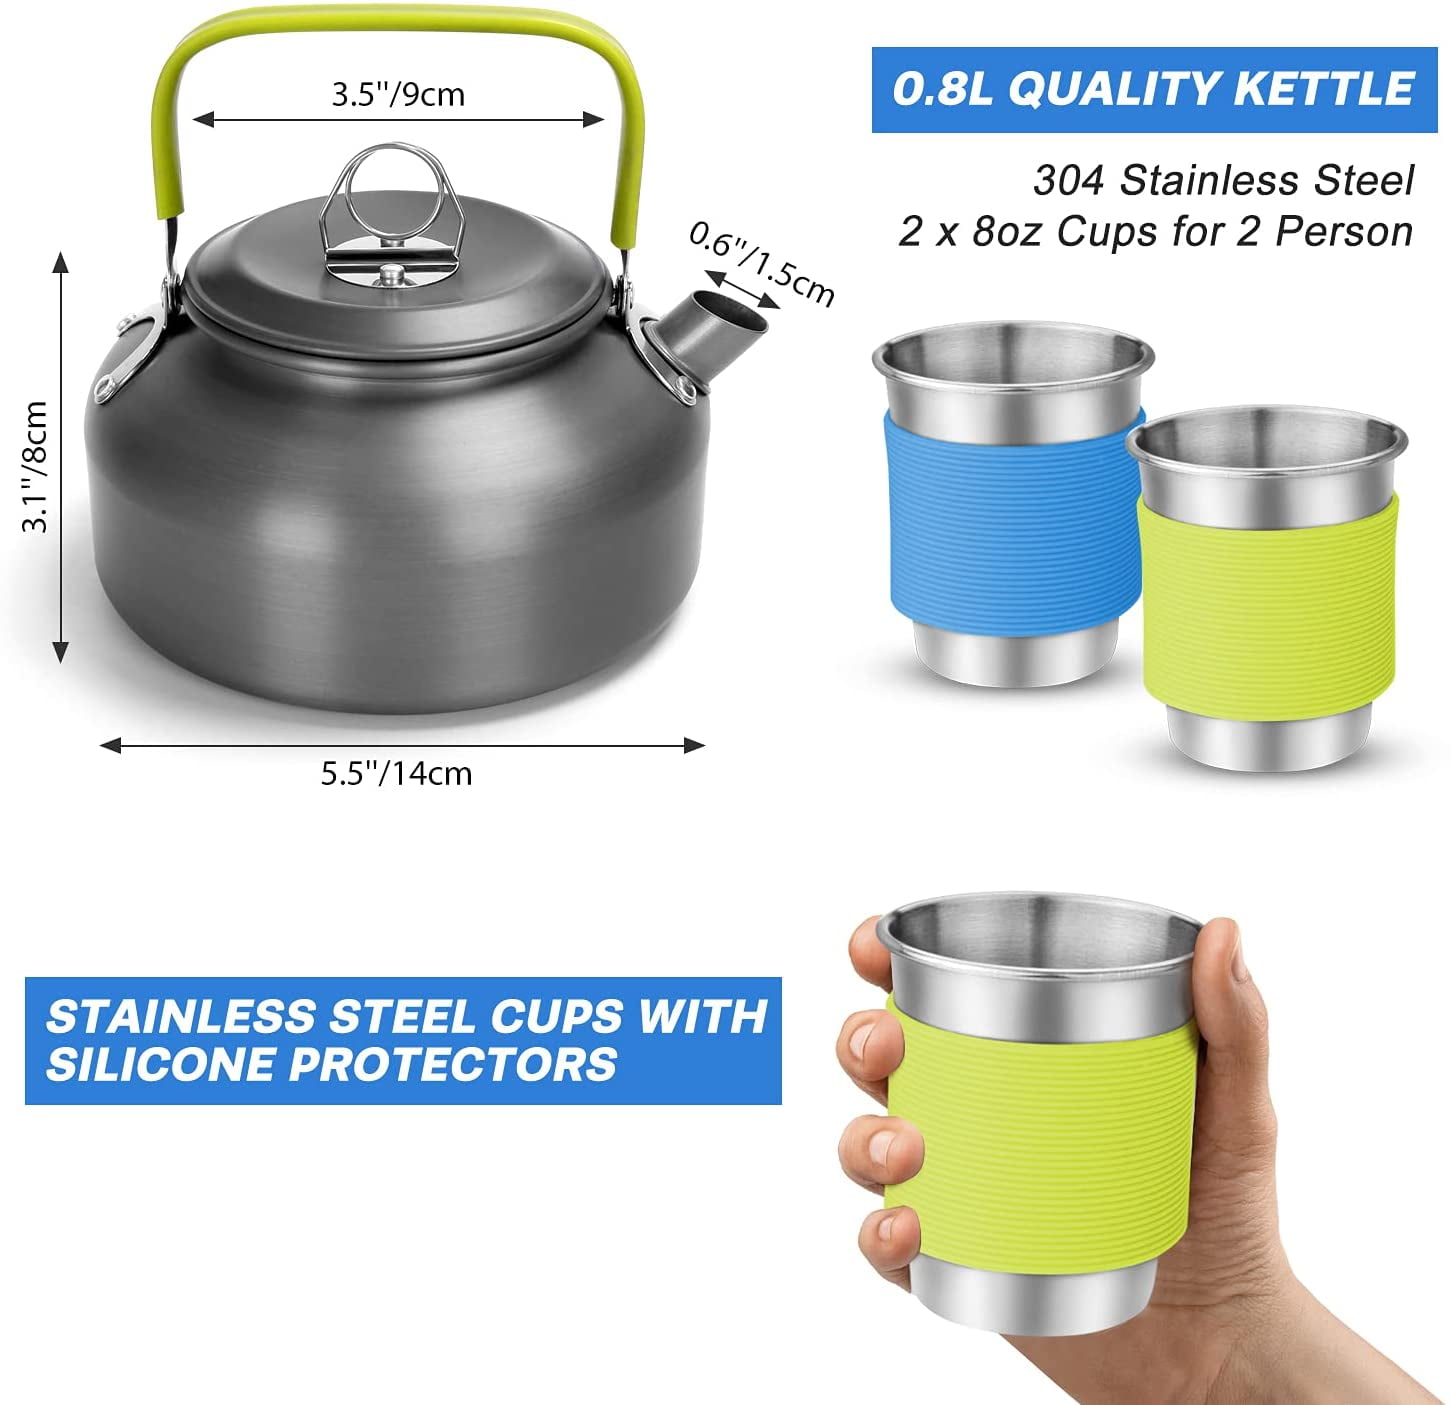 Camping Cookware Set Pot Pan Water Kettle Outdoor Compact Light weight  cooking